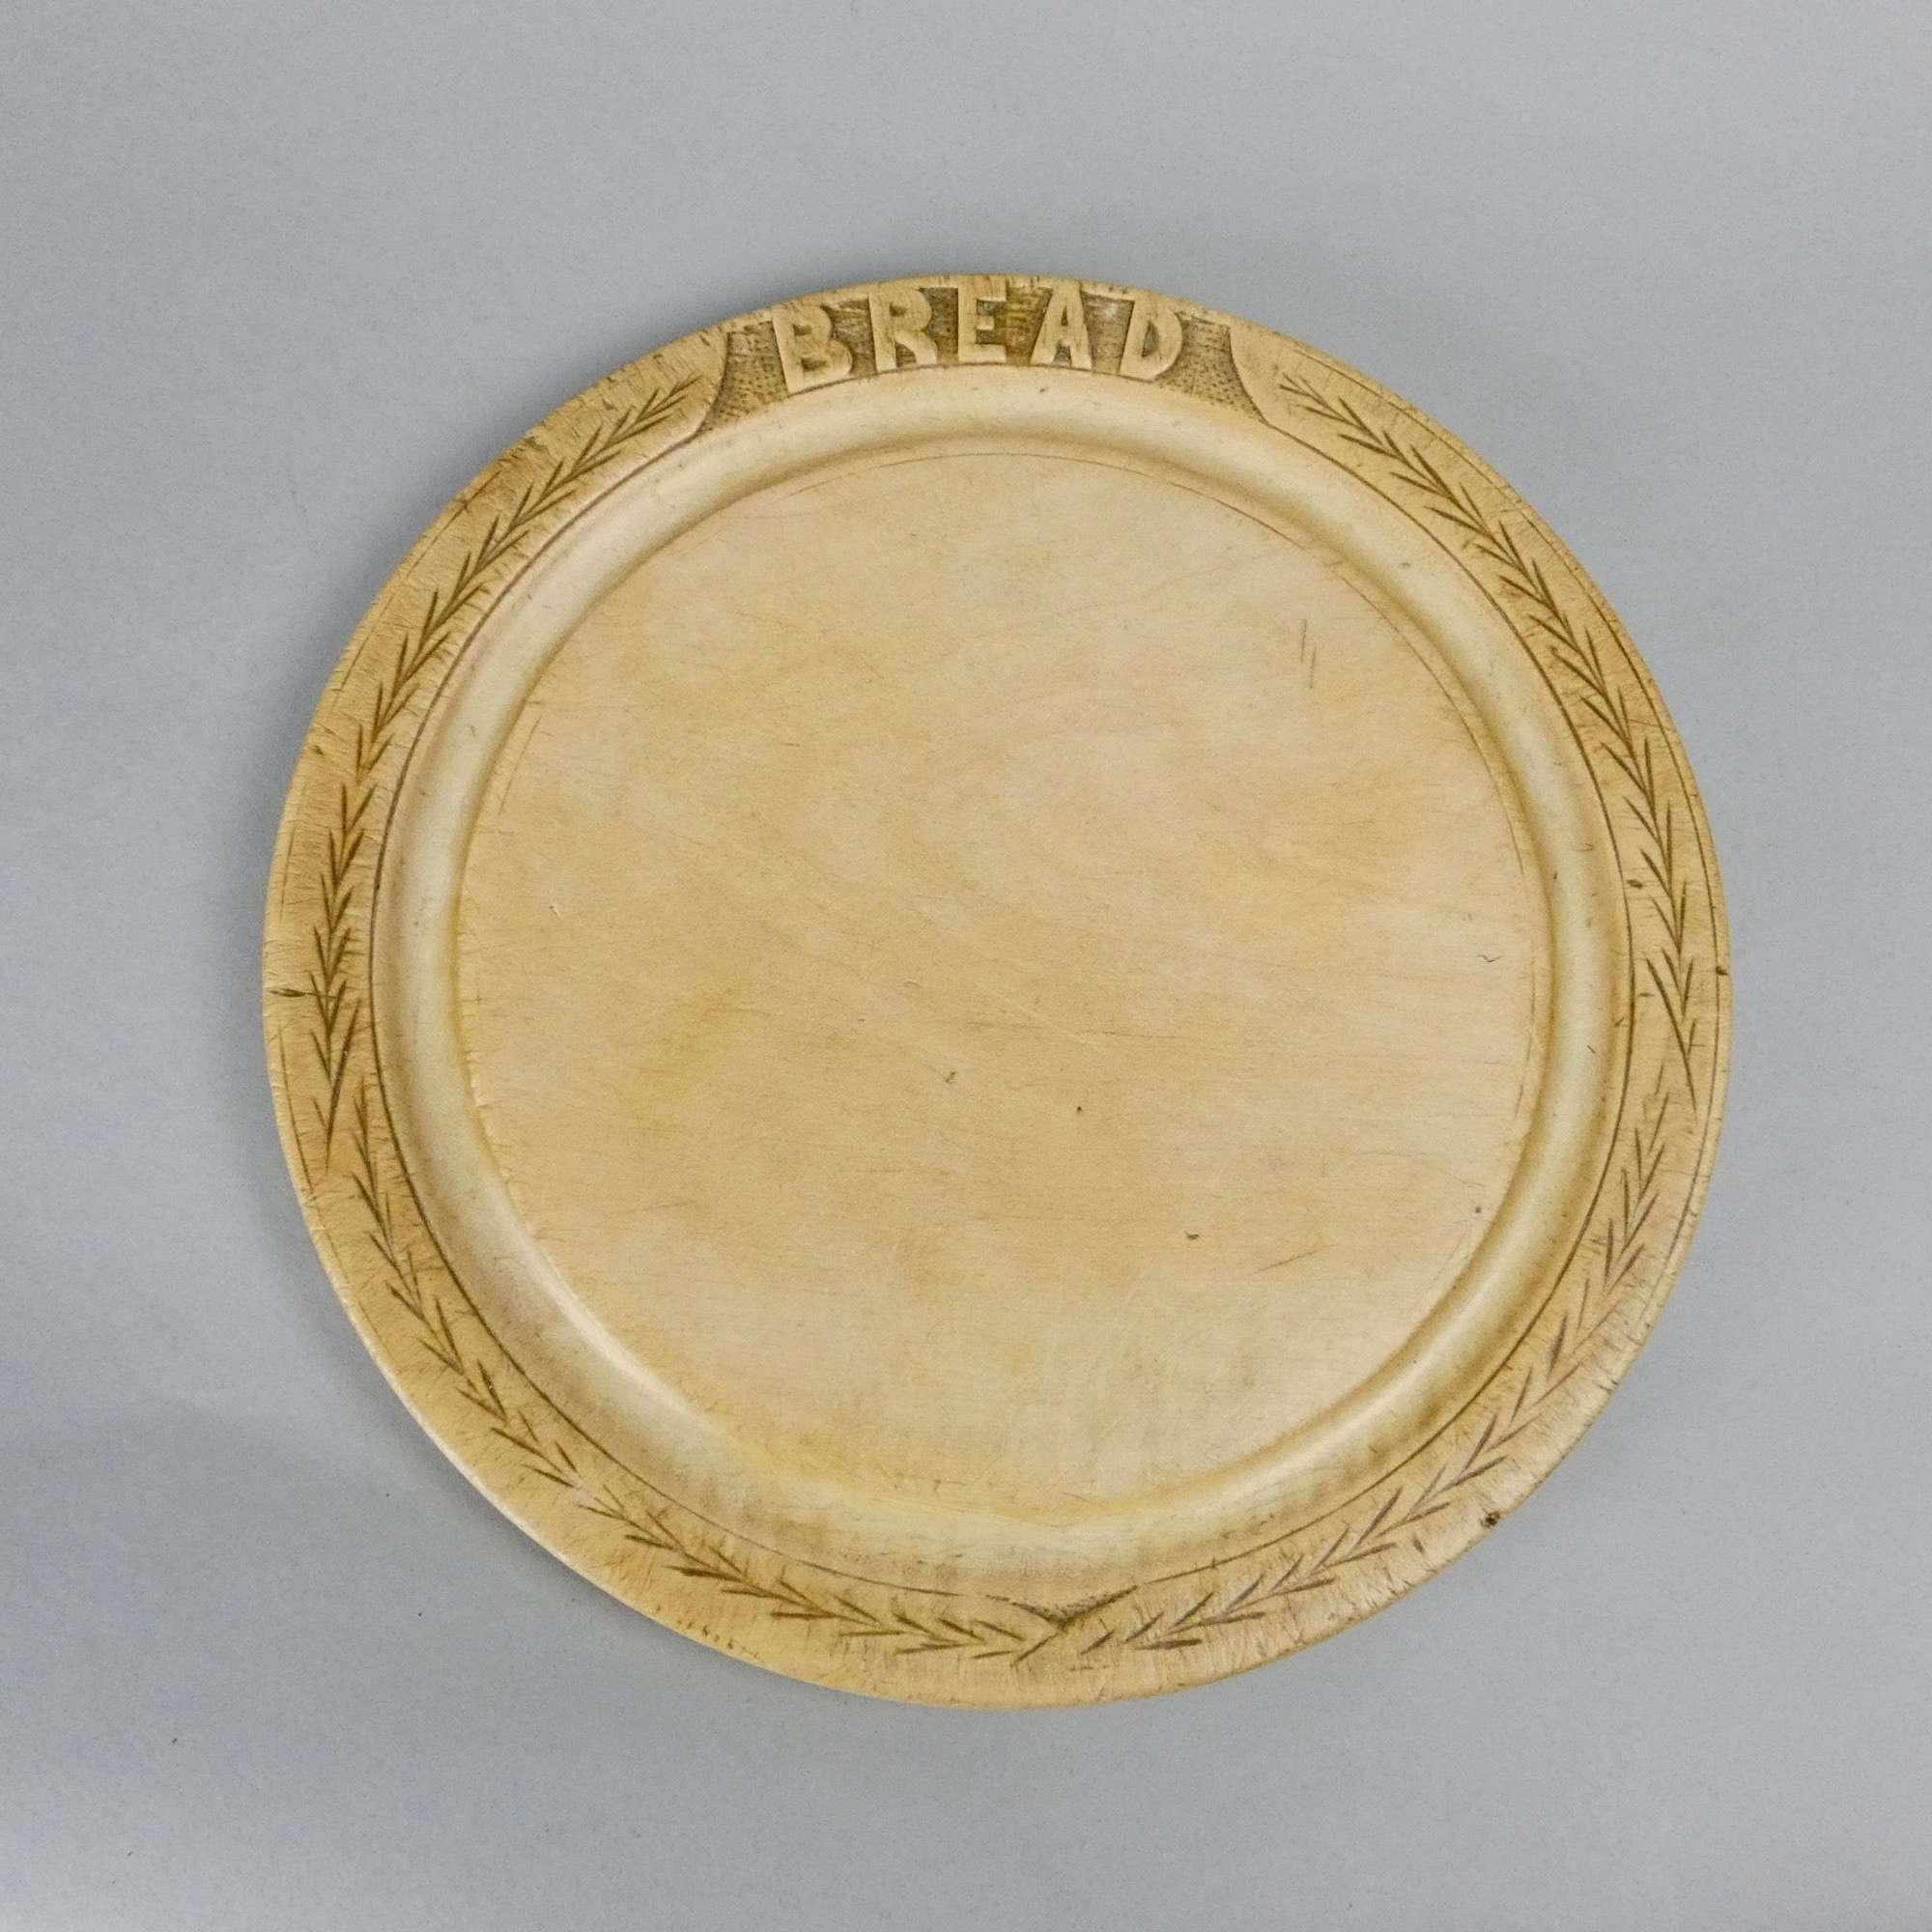 Chip carved breadboard